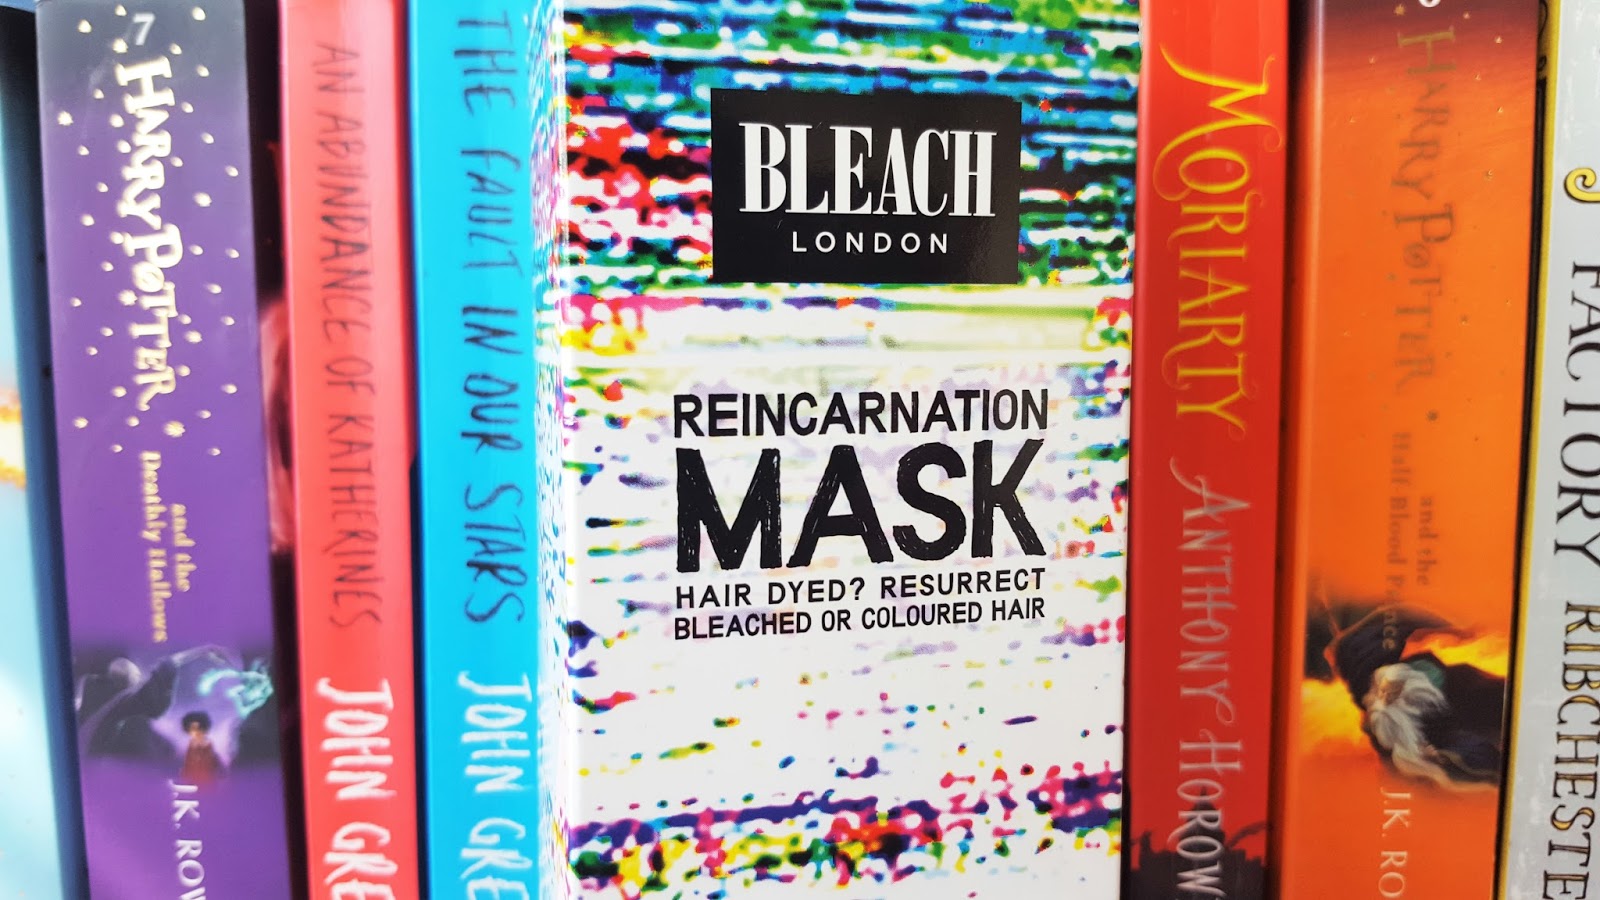 Bleach London Reincarnation Mask - wide 5